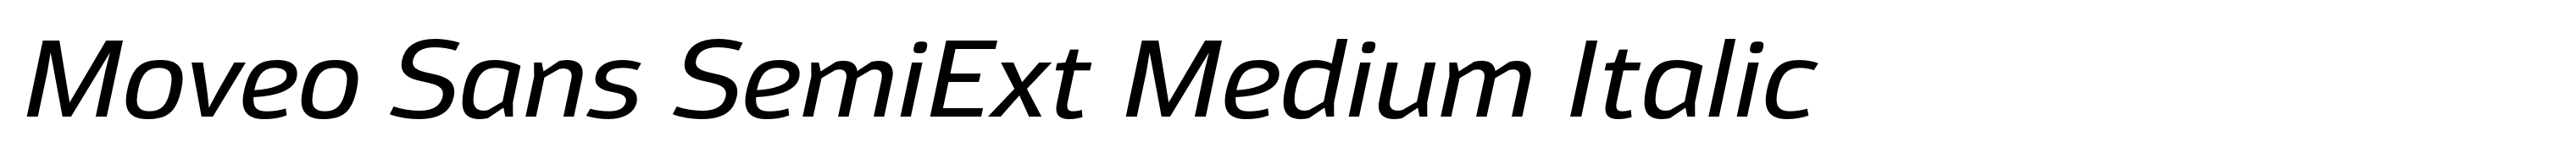 Moveo Sans SemiExt Medium Italic